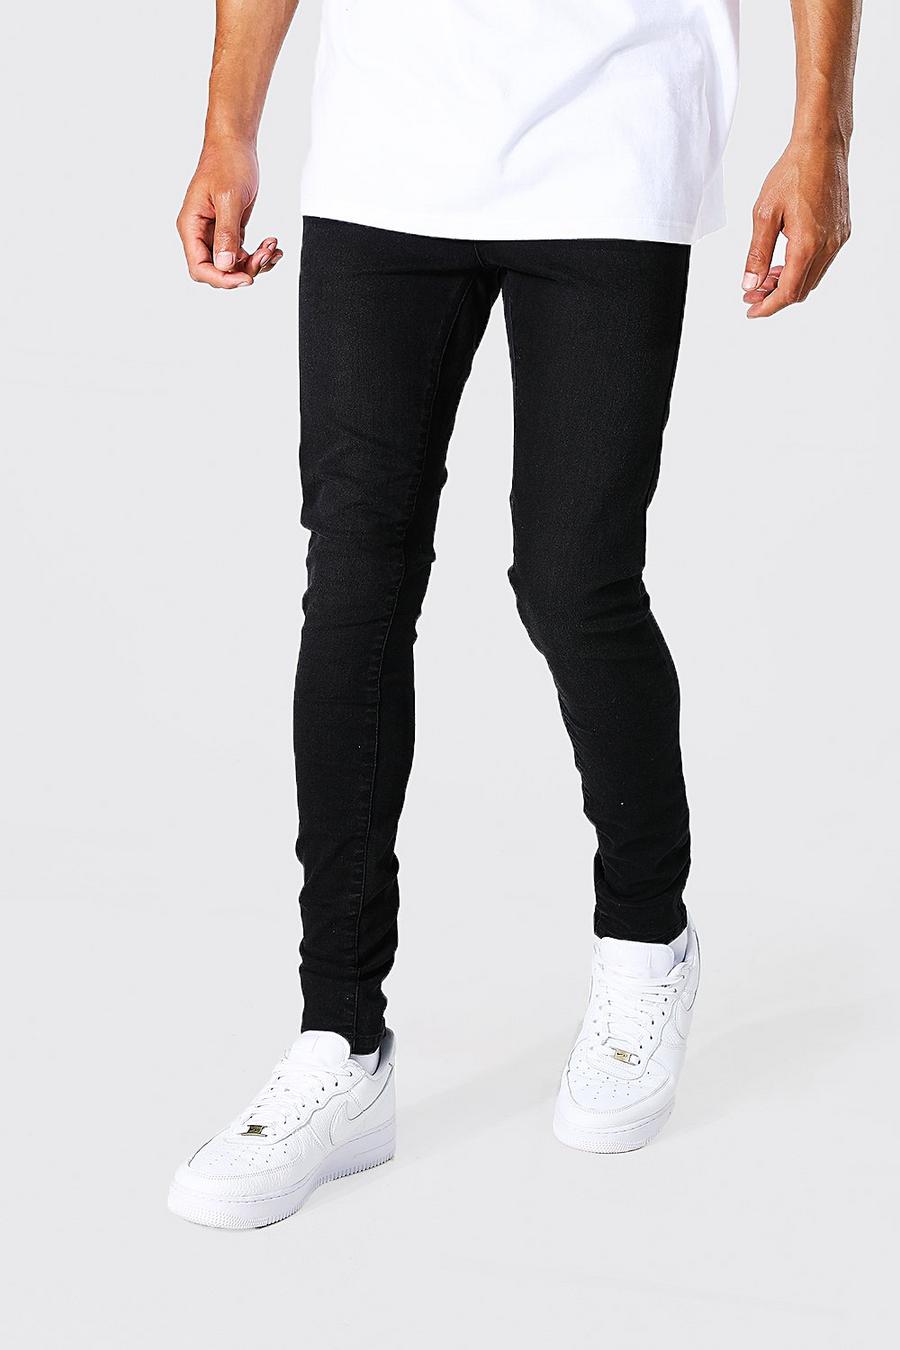 Washed black ג'ינס עם כותנה ממוחזרת בגזרת סופר סקיני, לגברים גבוהים